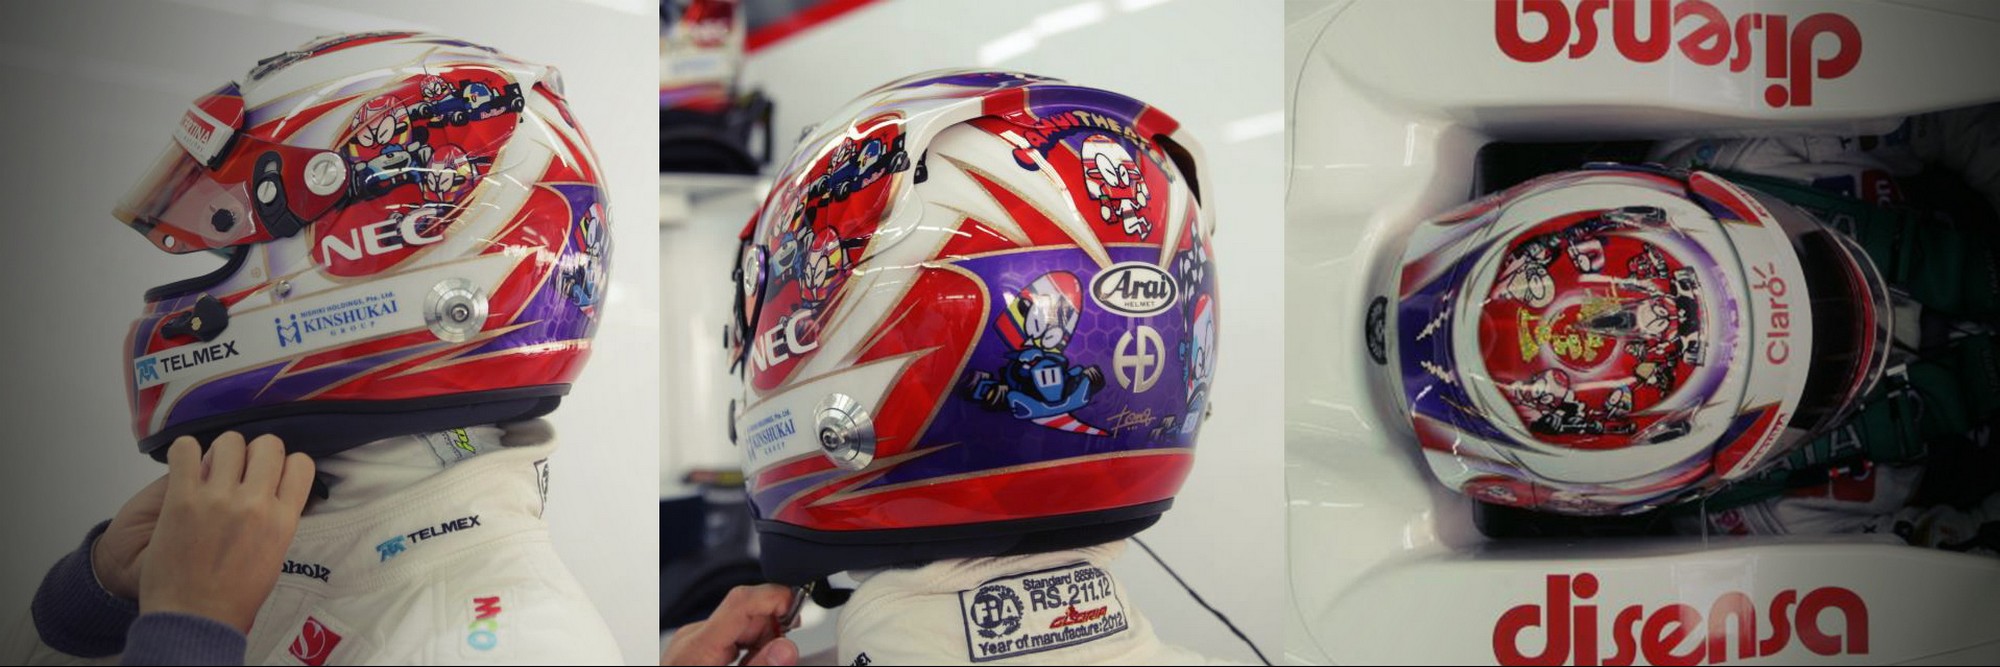 Шлем Камуи Кобаяши на Гран-При Кореи 2012 года | 2012 Korean Grand Prix helmet of Kamui Kobayashi